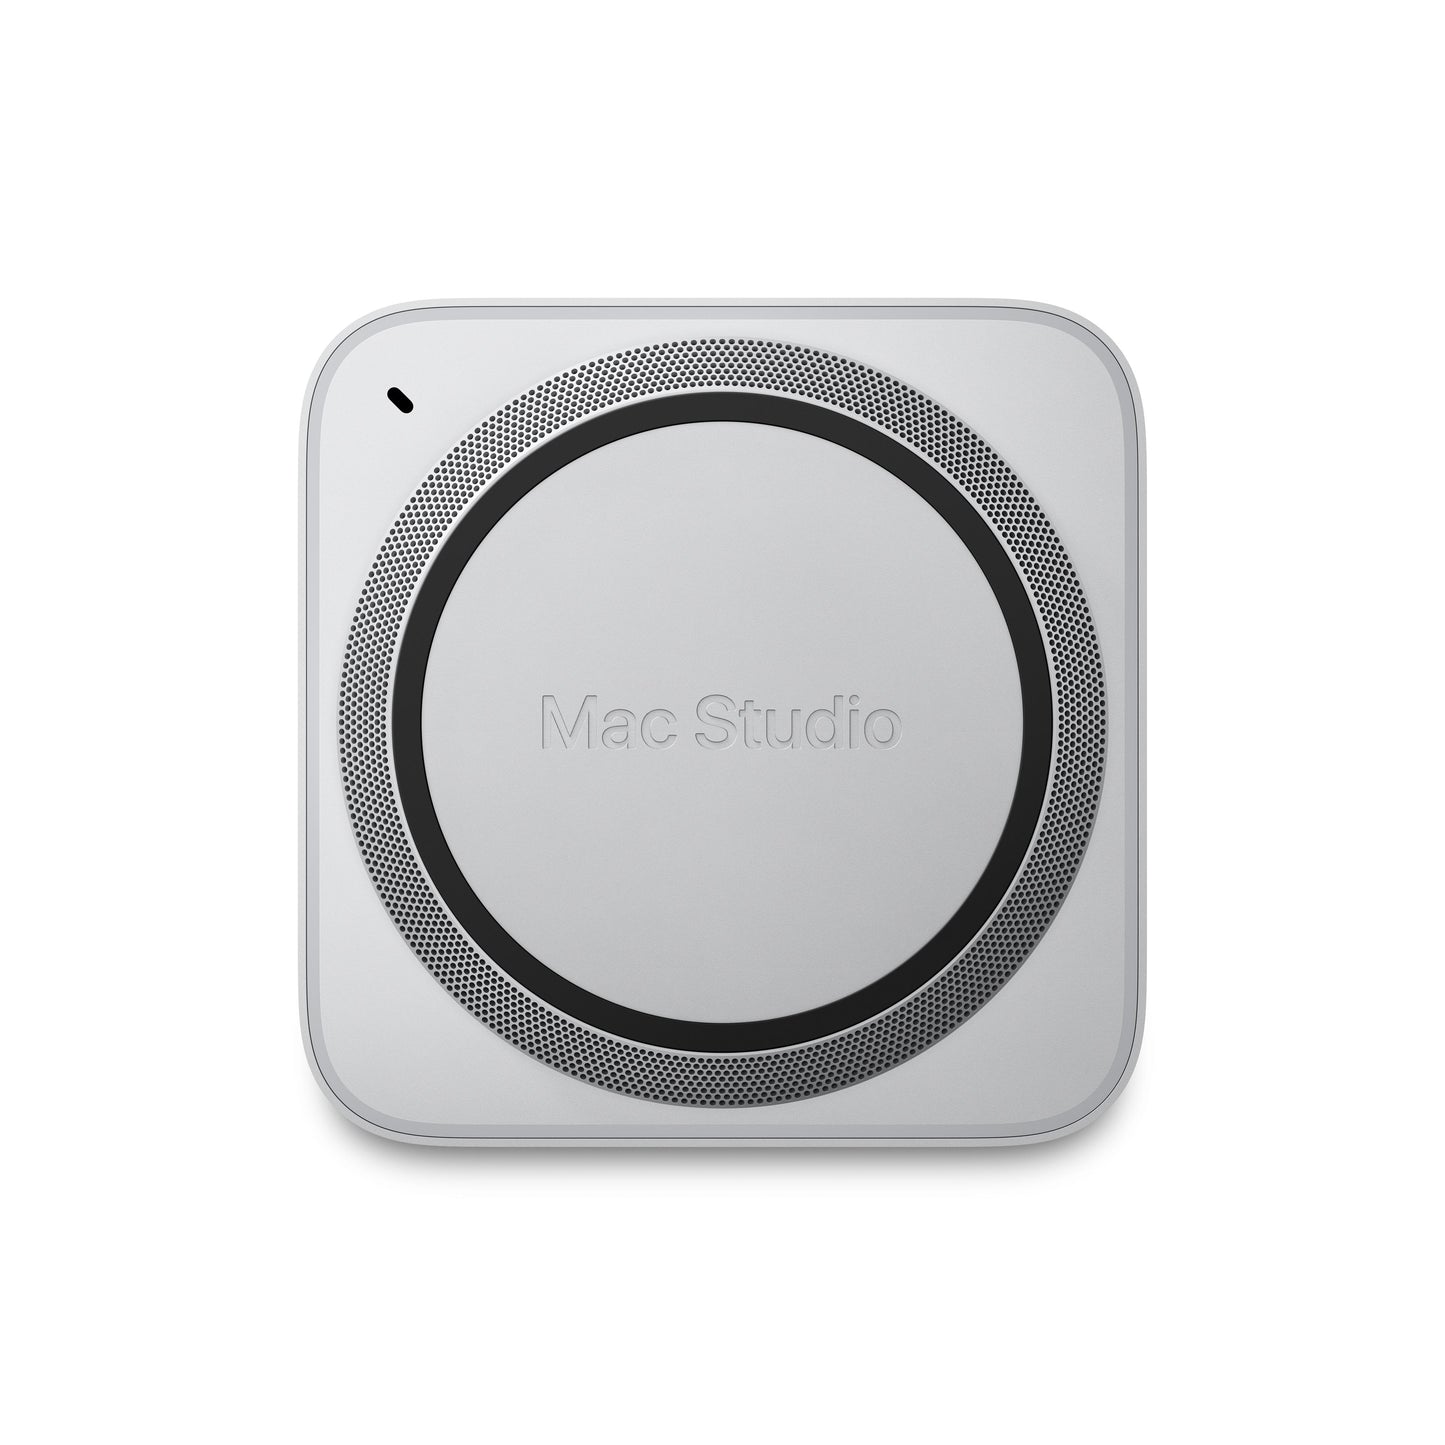 Mac Studio: Apple M1 Max chip with 10_core CPU and 24_core GPU, 512GB SSD